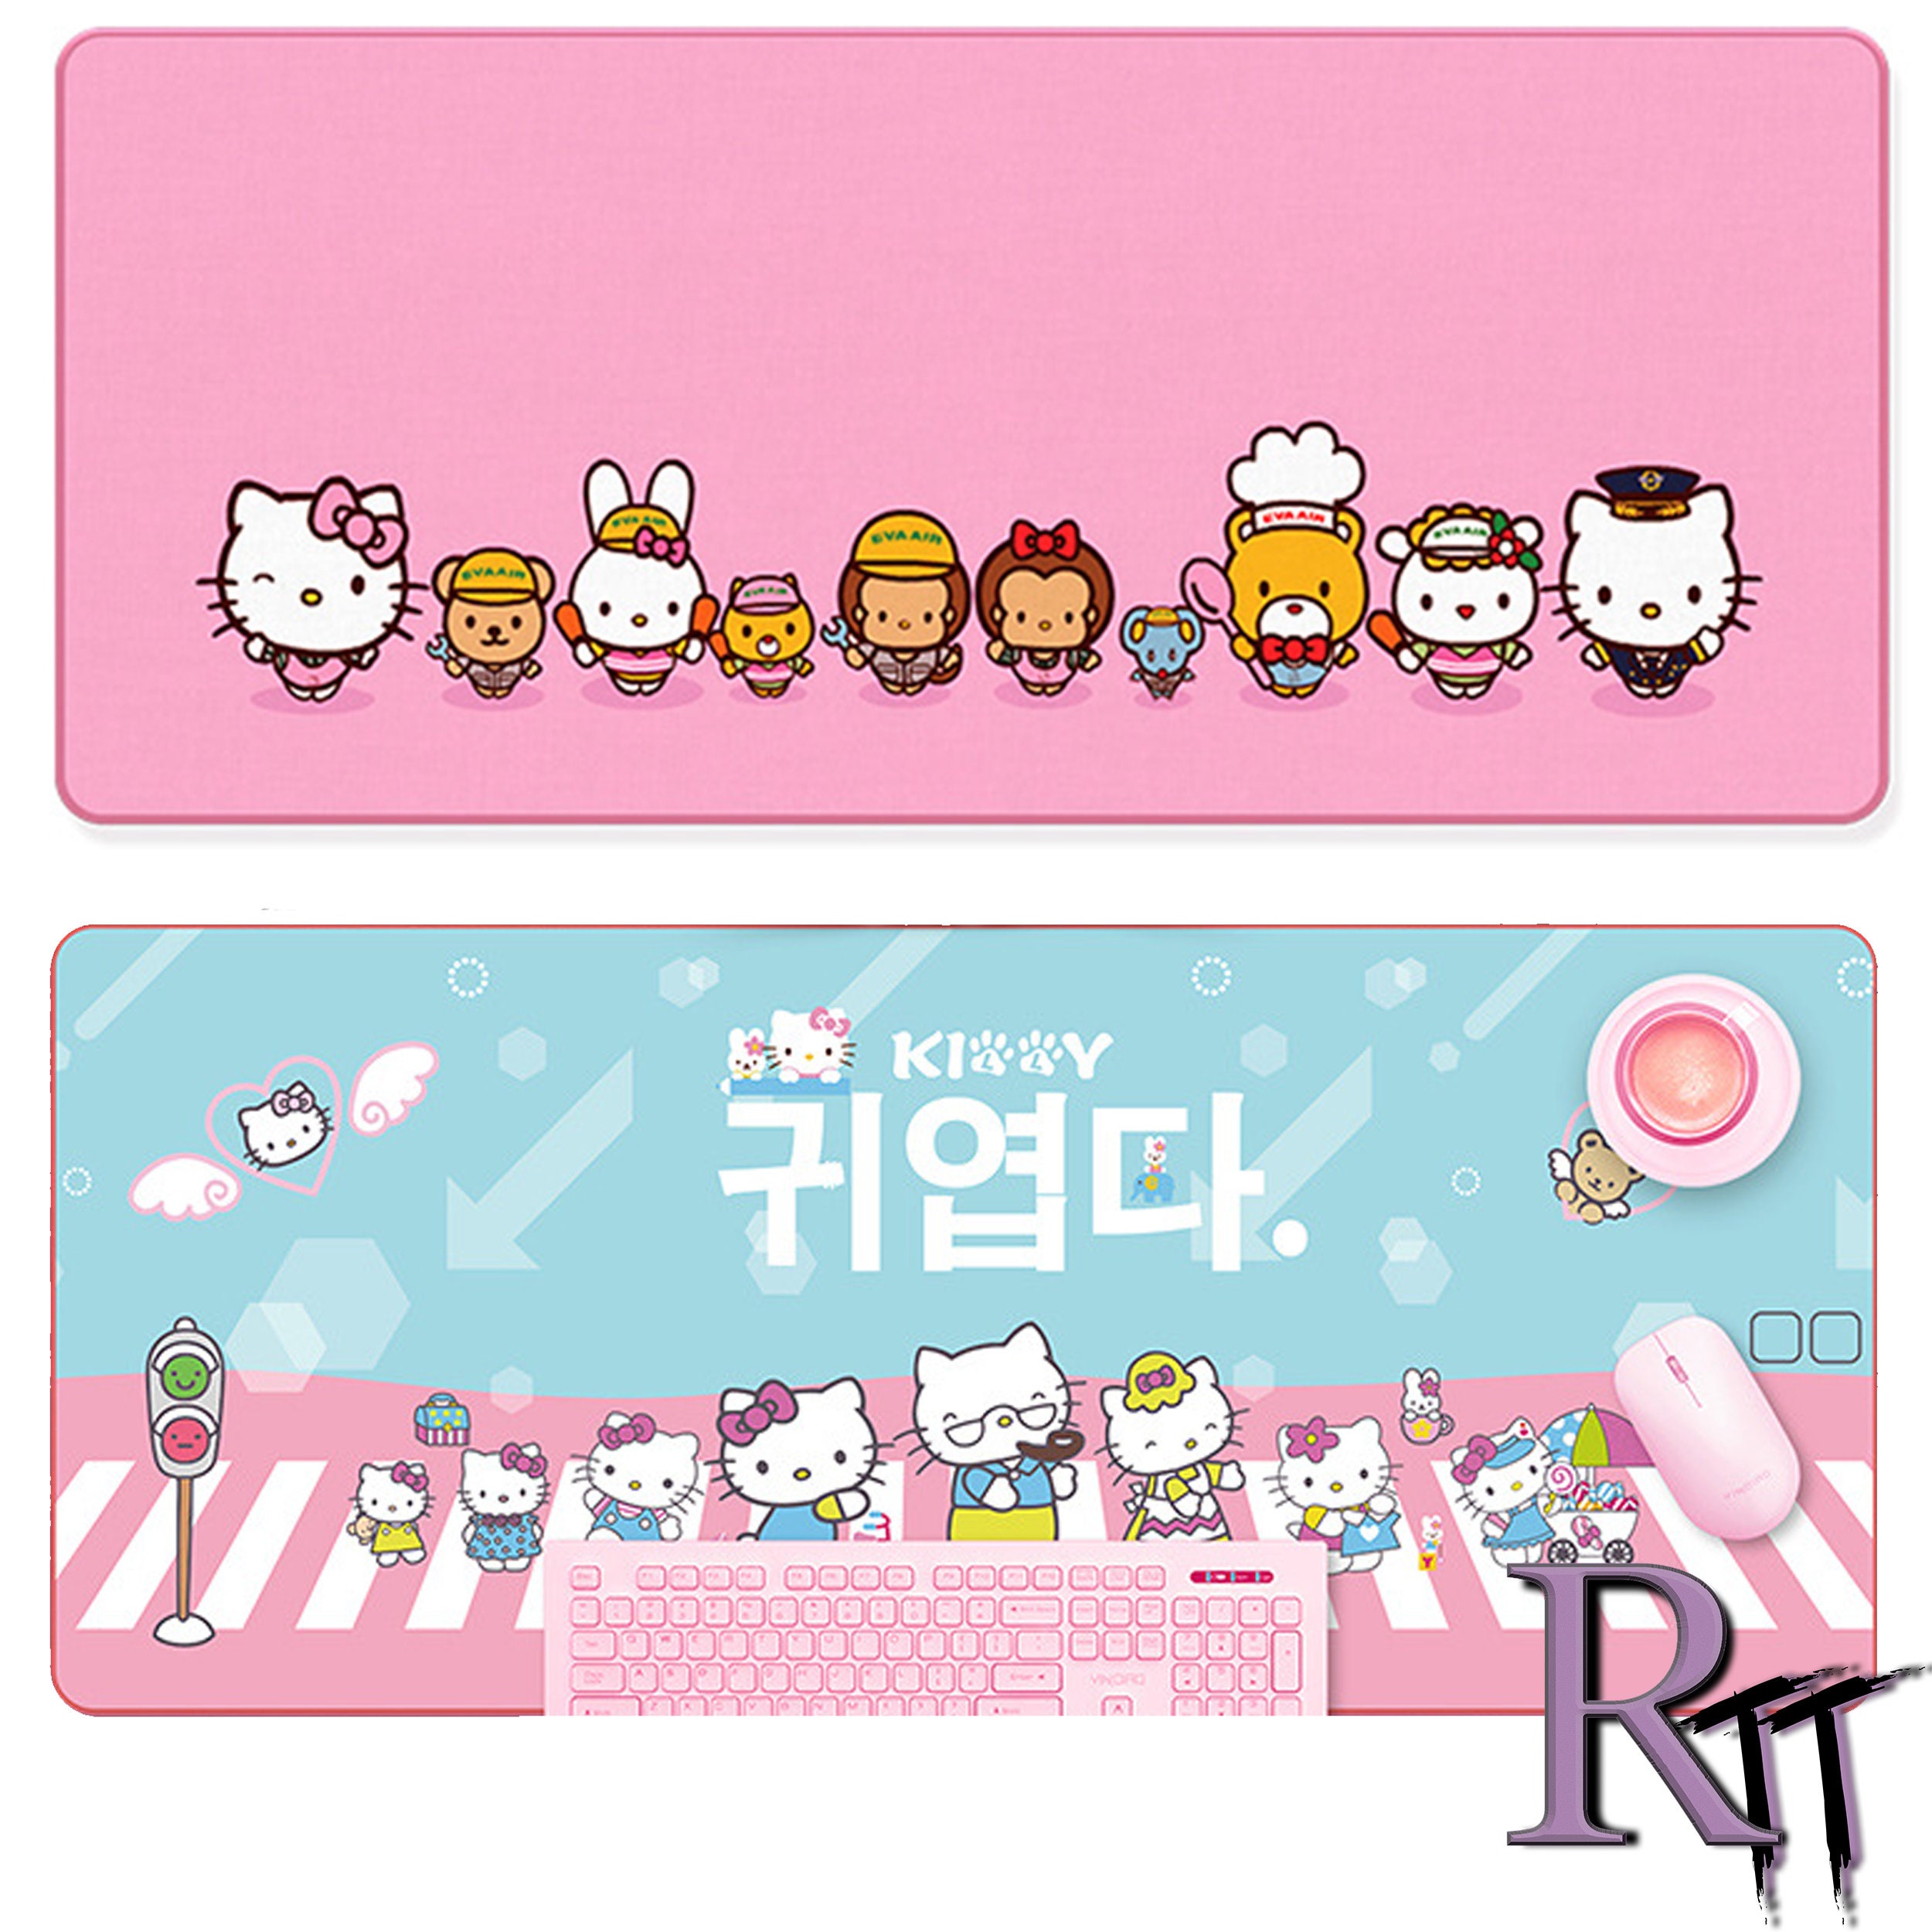 Buy Famixyal Fashion Cartoon Hello Kitty Optical Mouse pad